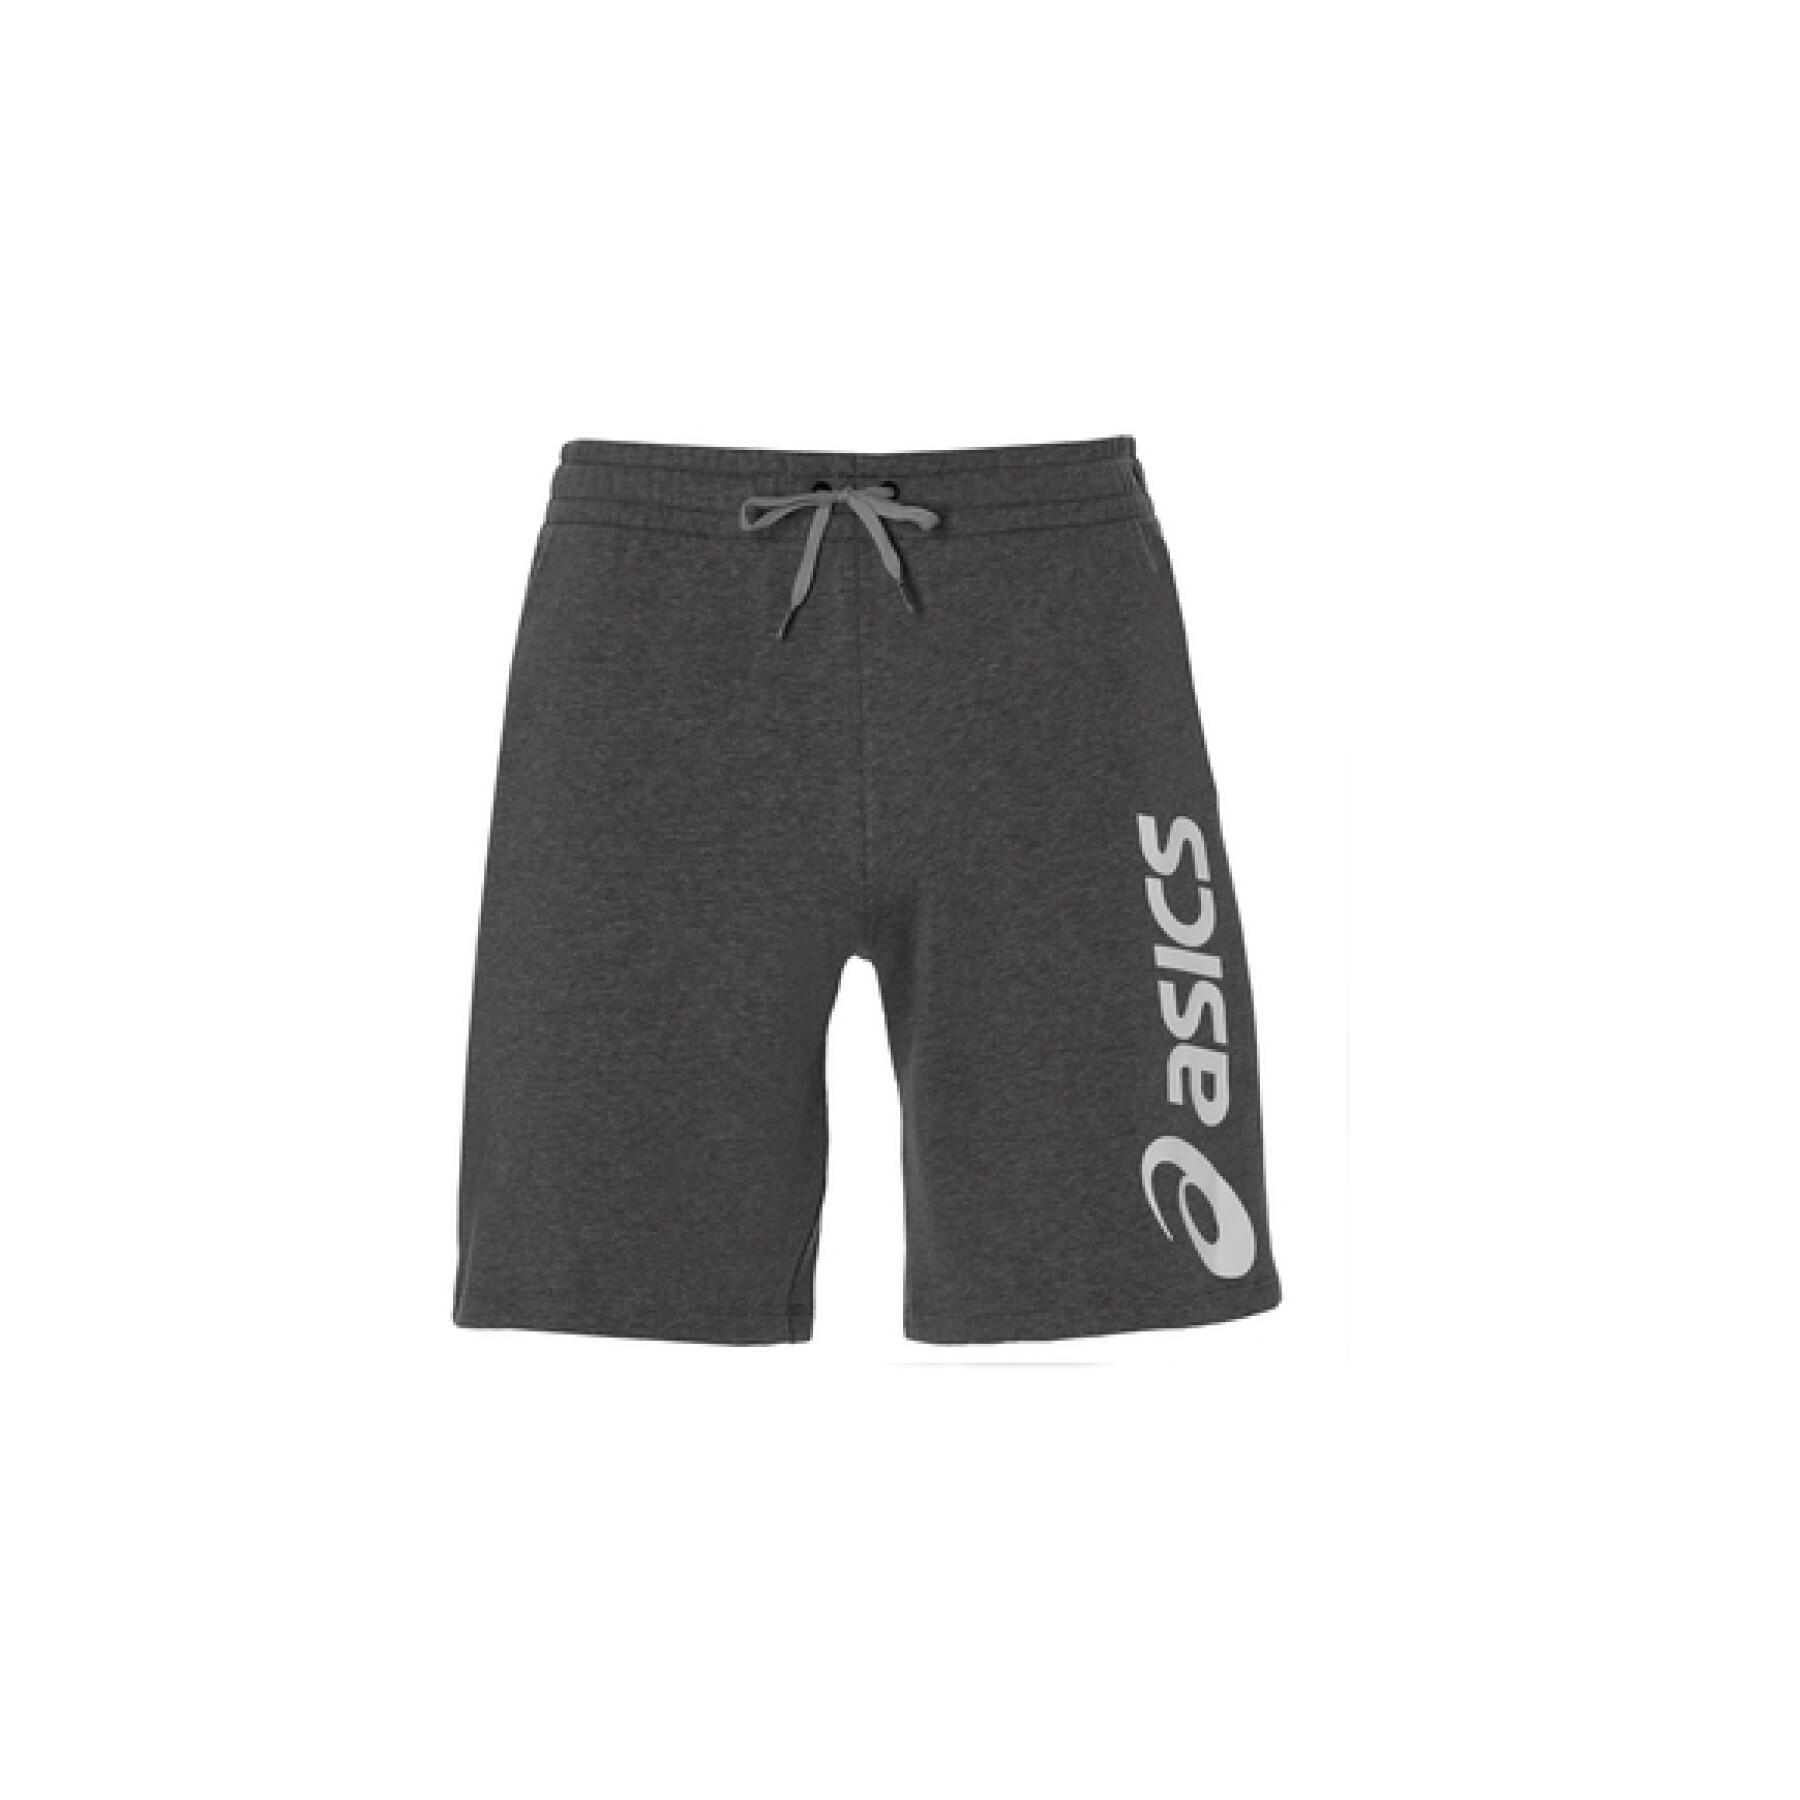 Shorts Asics big logo Sweat